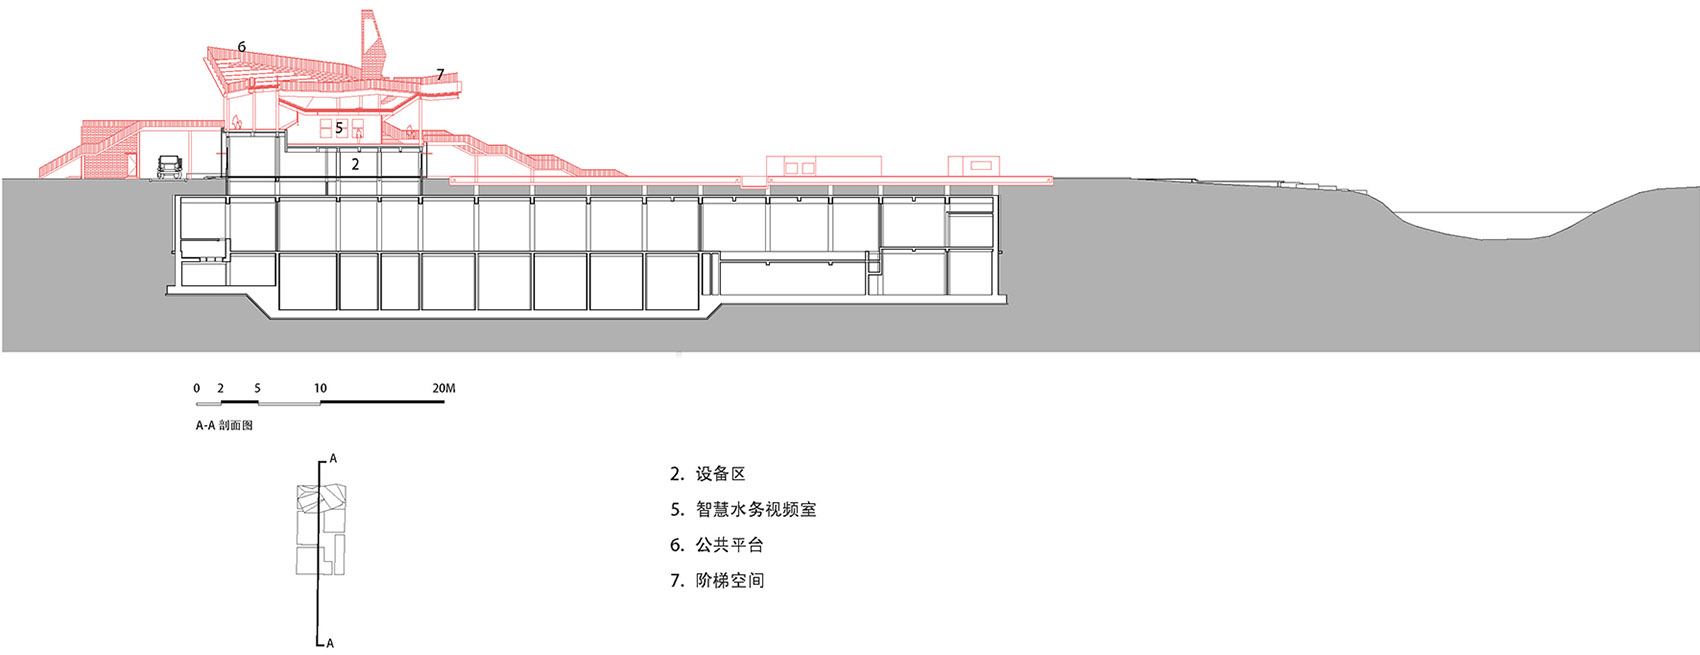 062-pingshan-balcony-by-node-architecture-urbanism.jpg